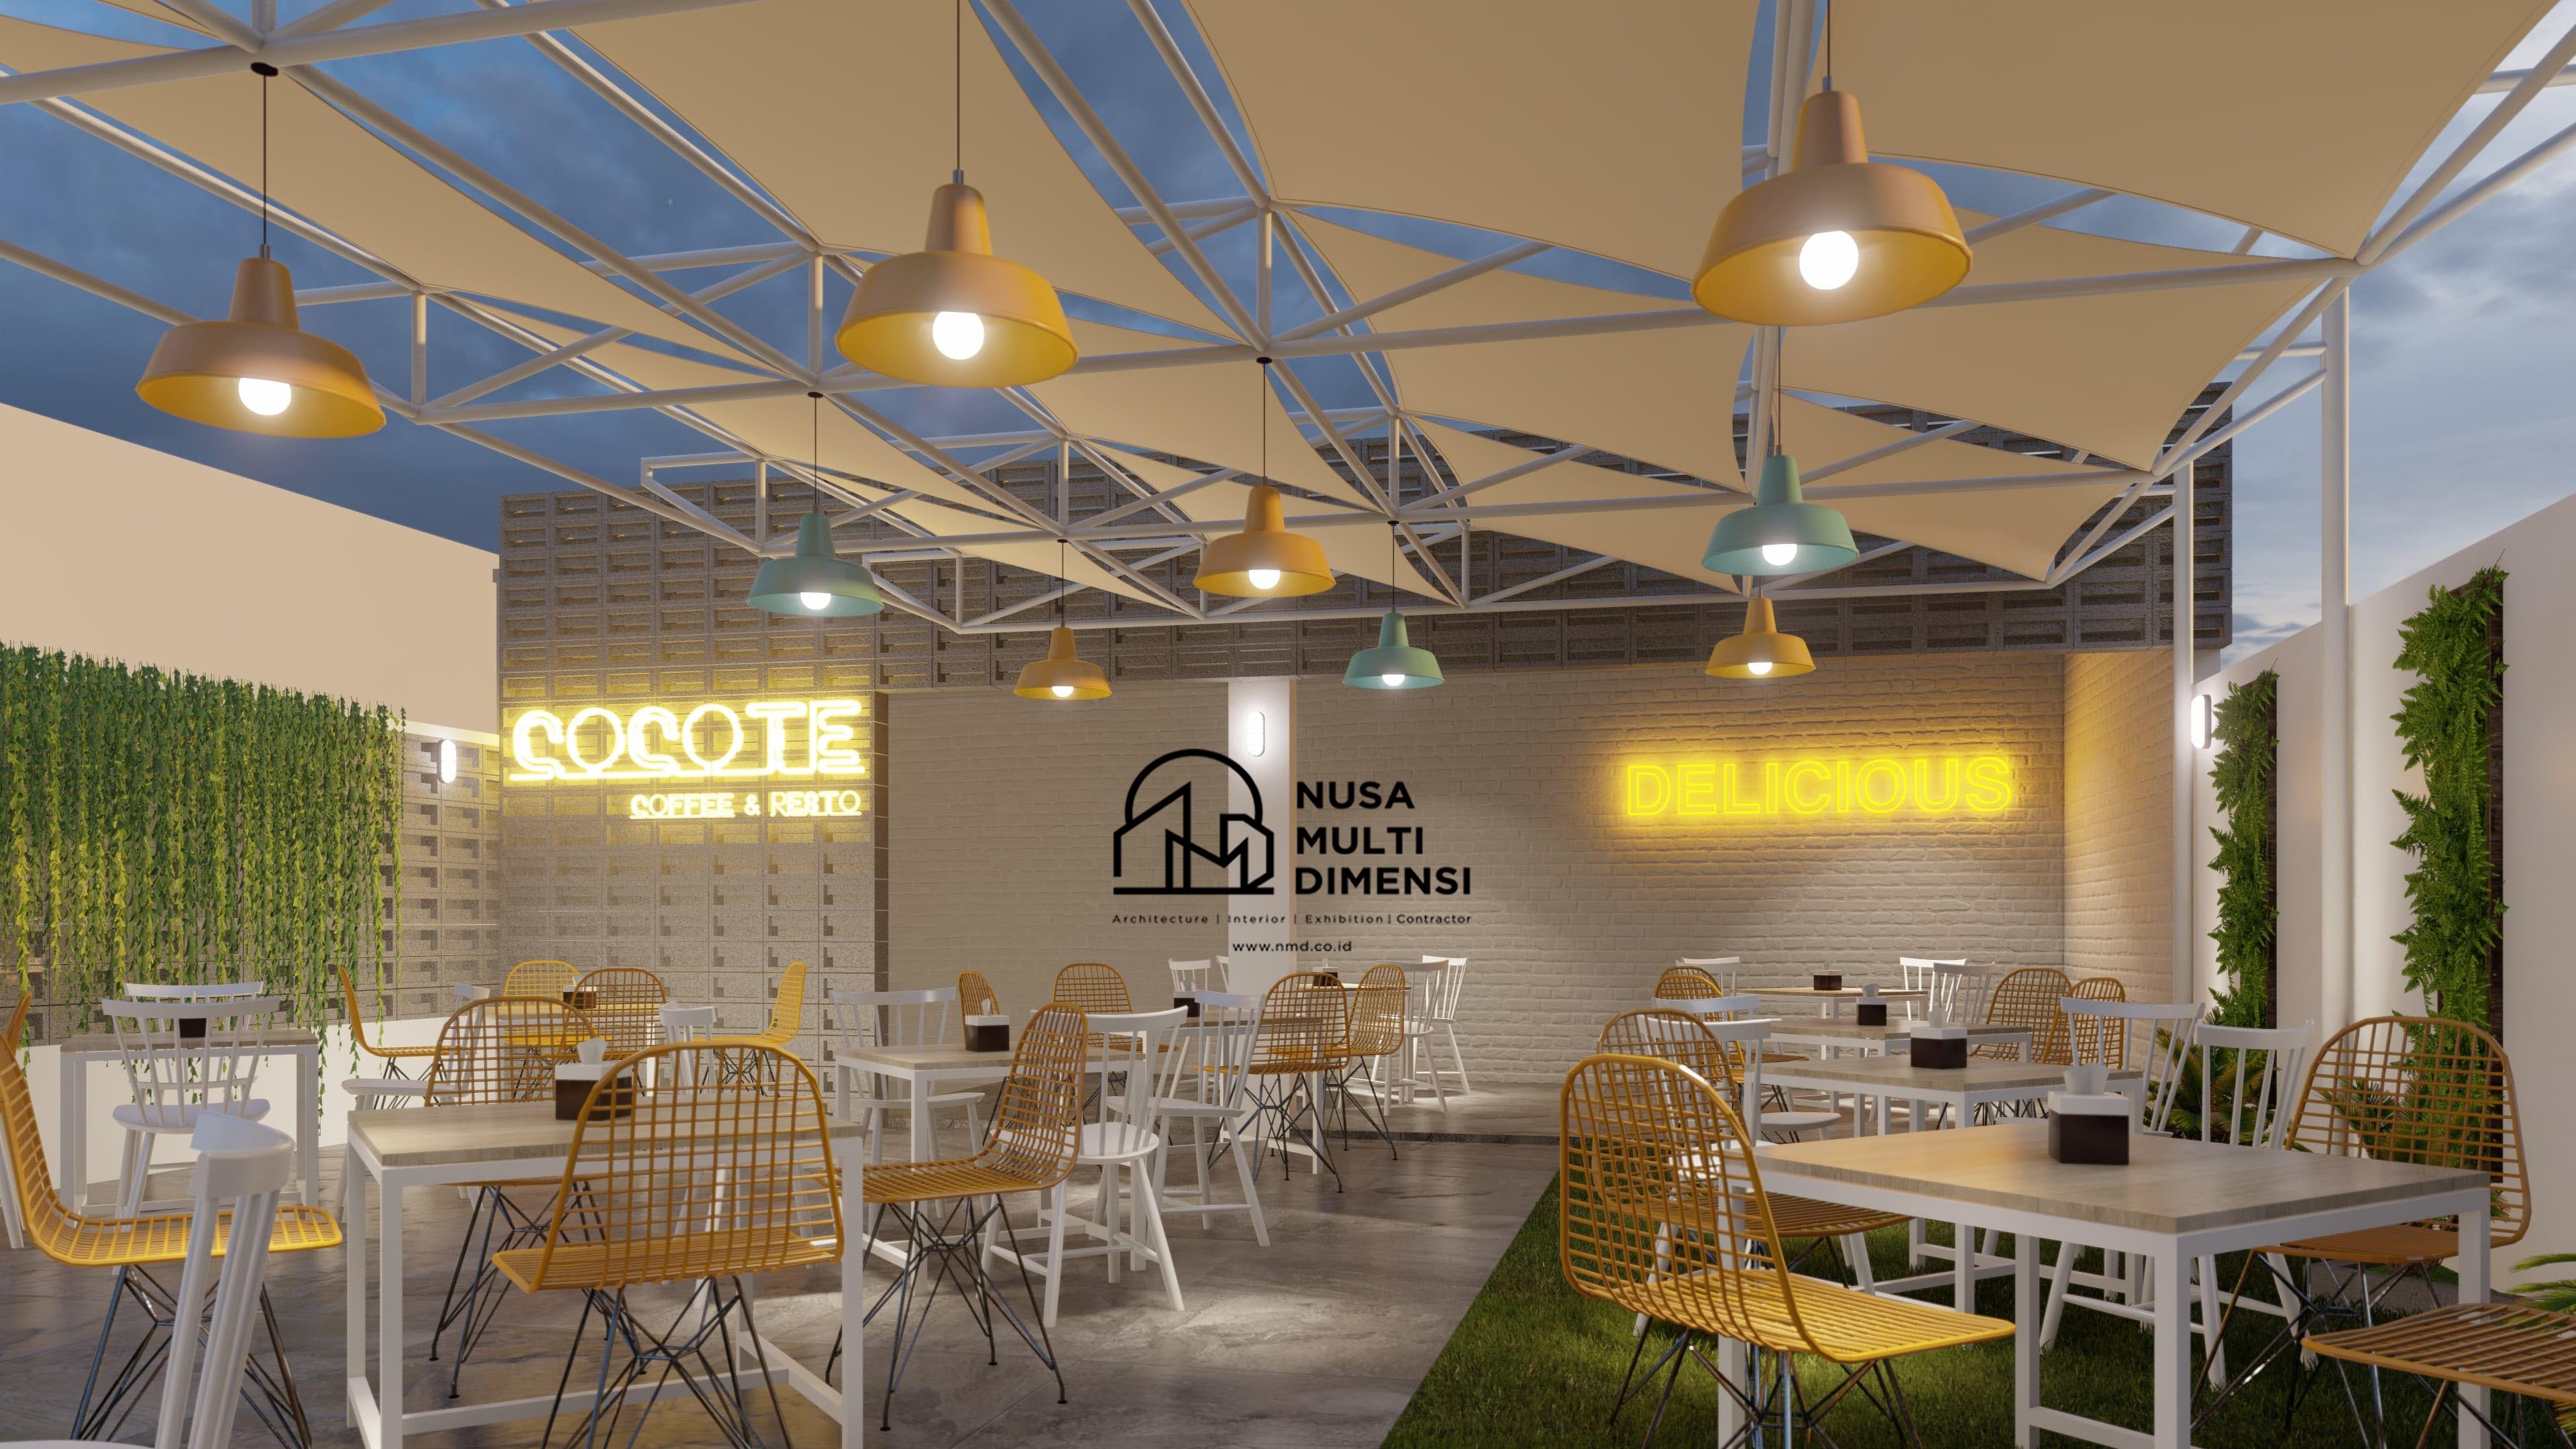 Desain Cocote Cafe Depok 10